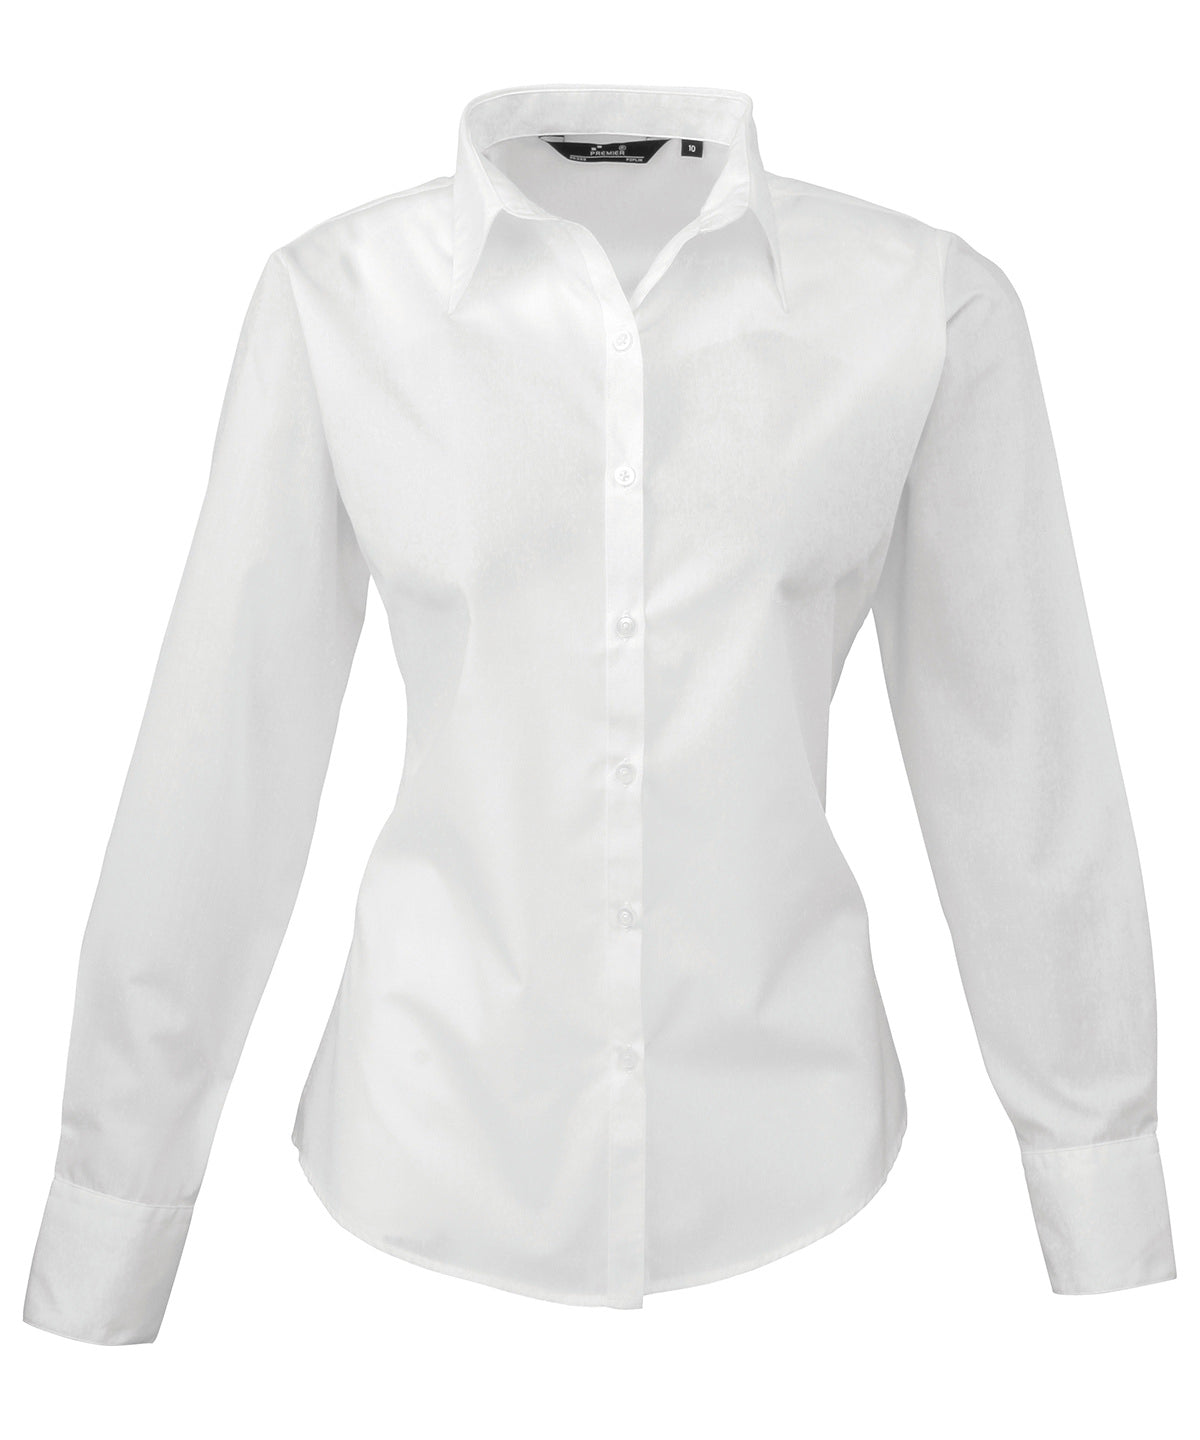 Premier Women's poplin long sleeve blouse White